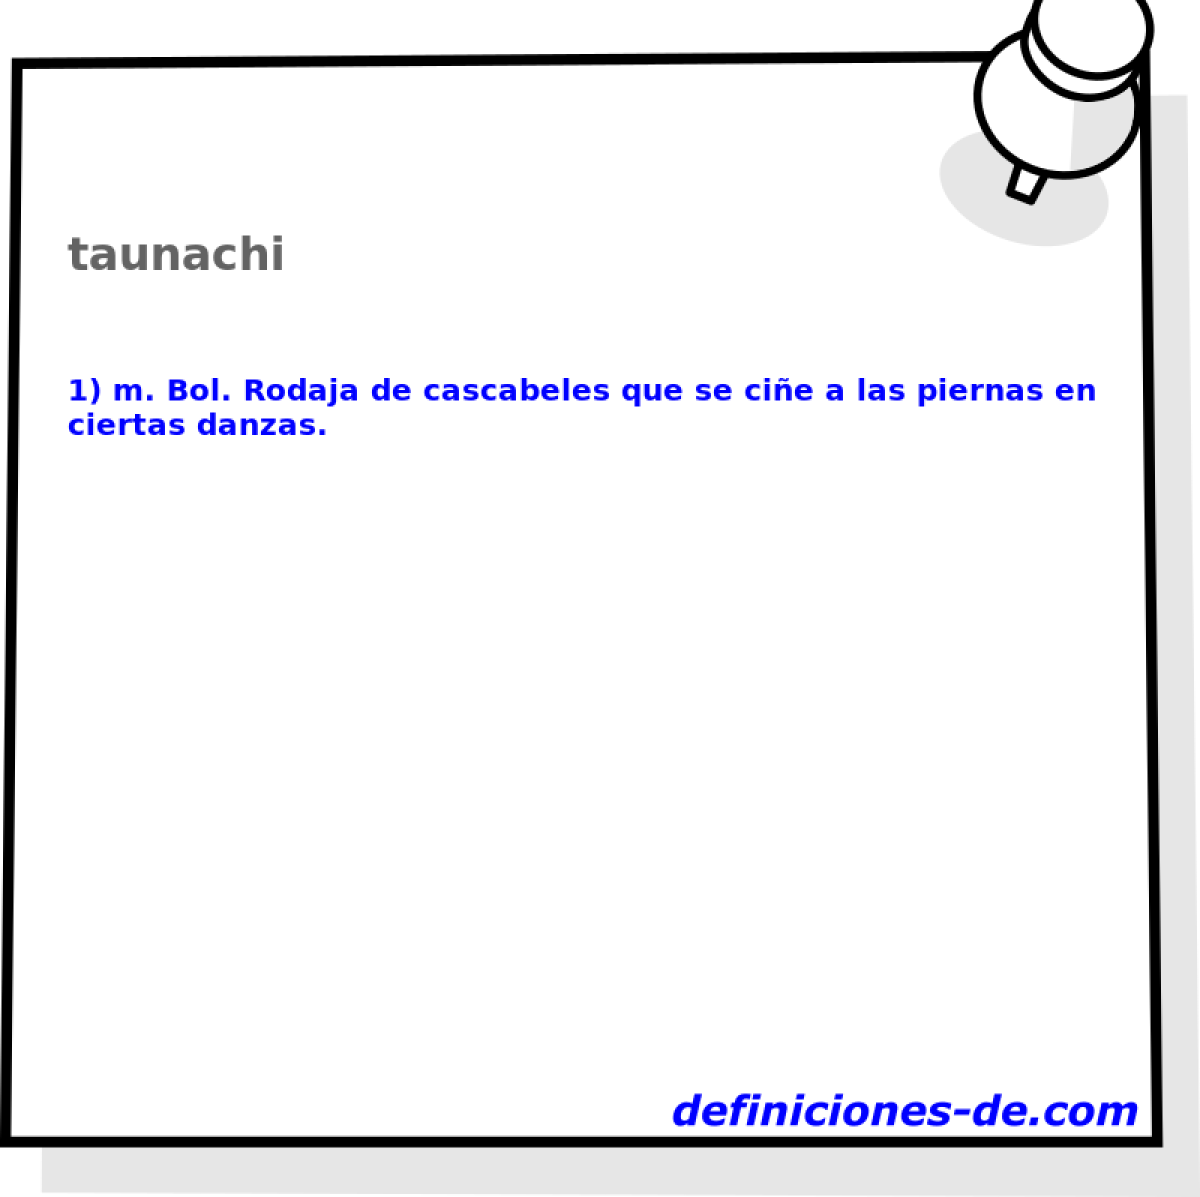 taunachi 